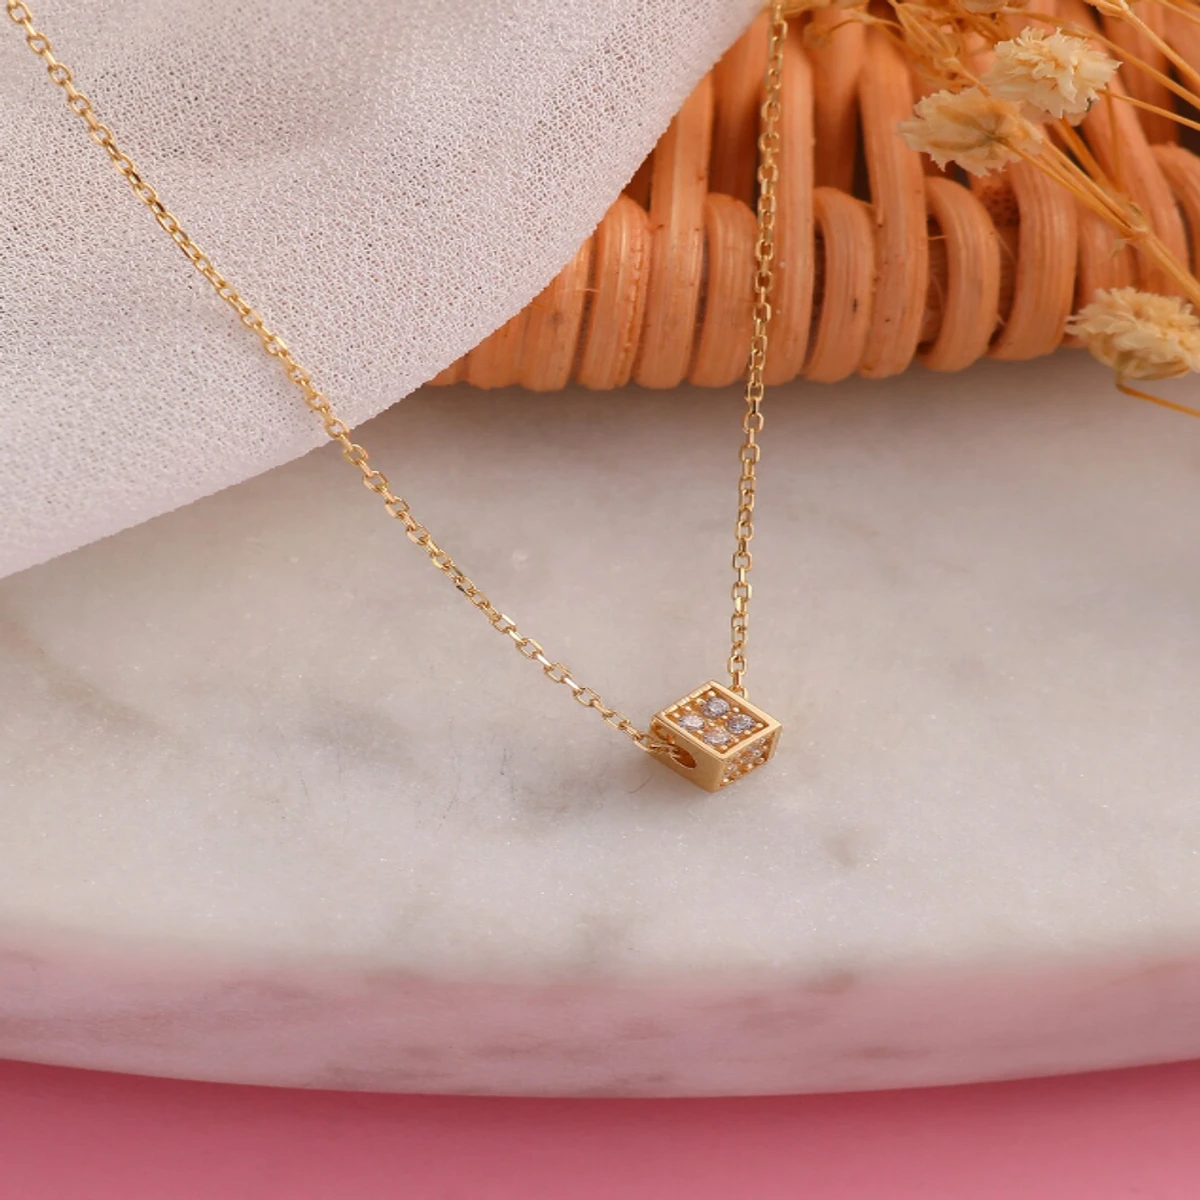 Pearl Pendant Necklaces Golden stylish Women Chain